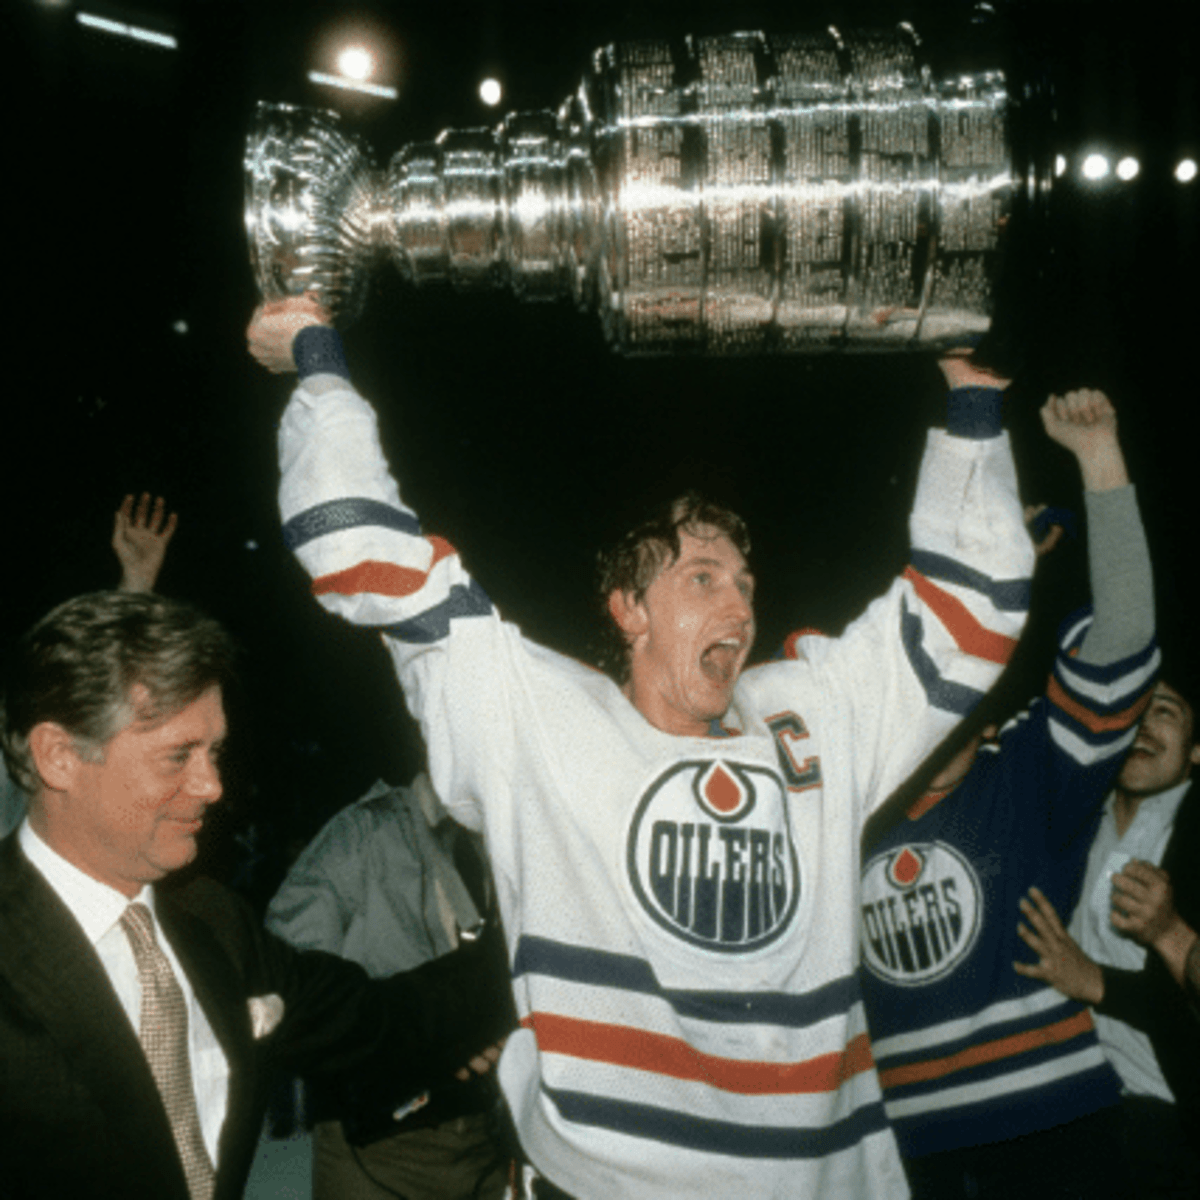 Gretzky, Selanne headline alumni game at Heritage Classic in Winnipeg